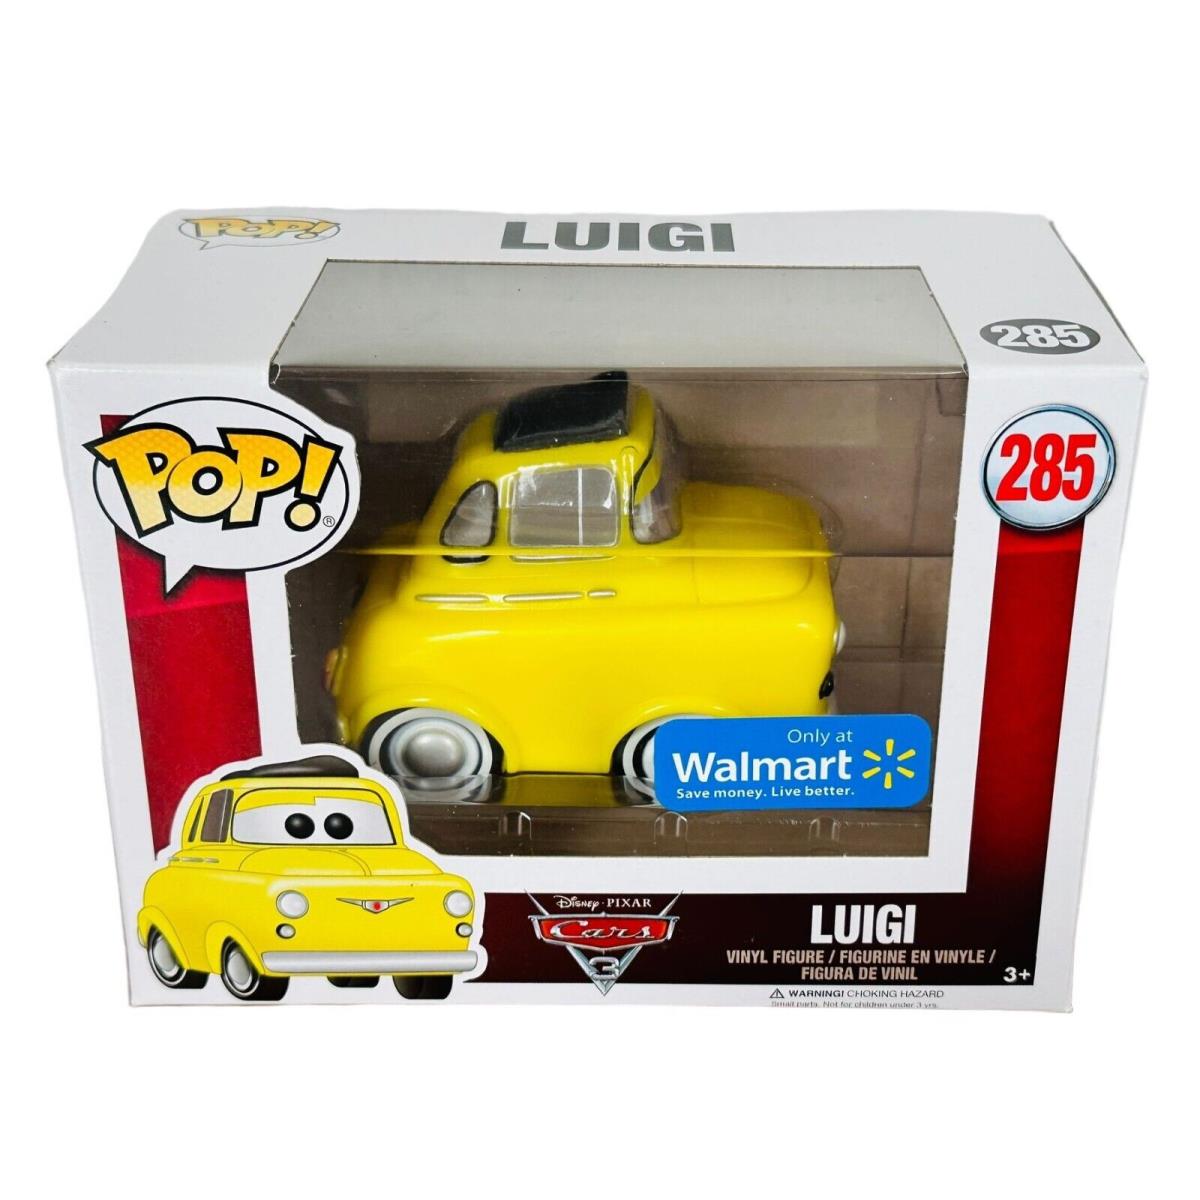 Luigi Funko Pop 285 Cars Walmart Exclusive Toy Figure